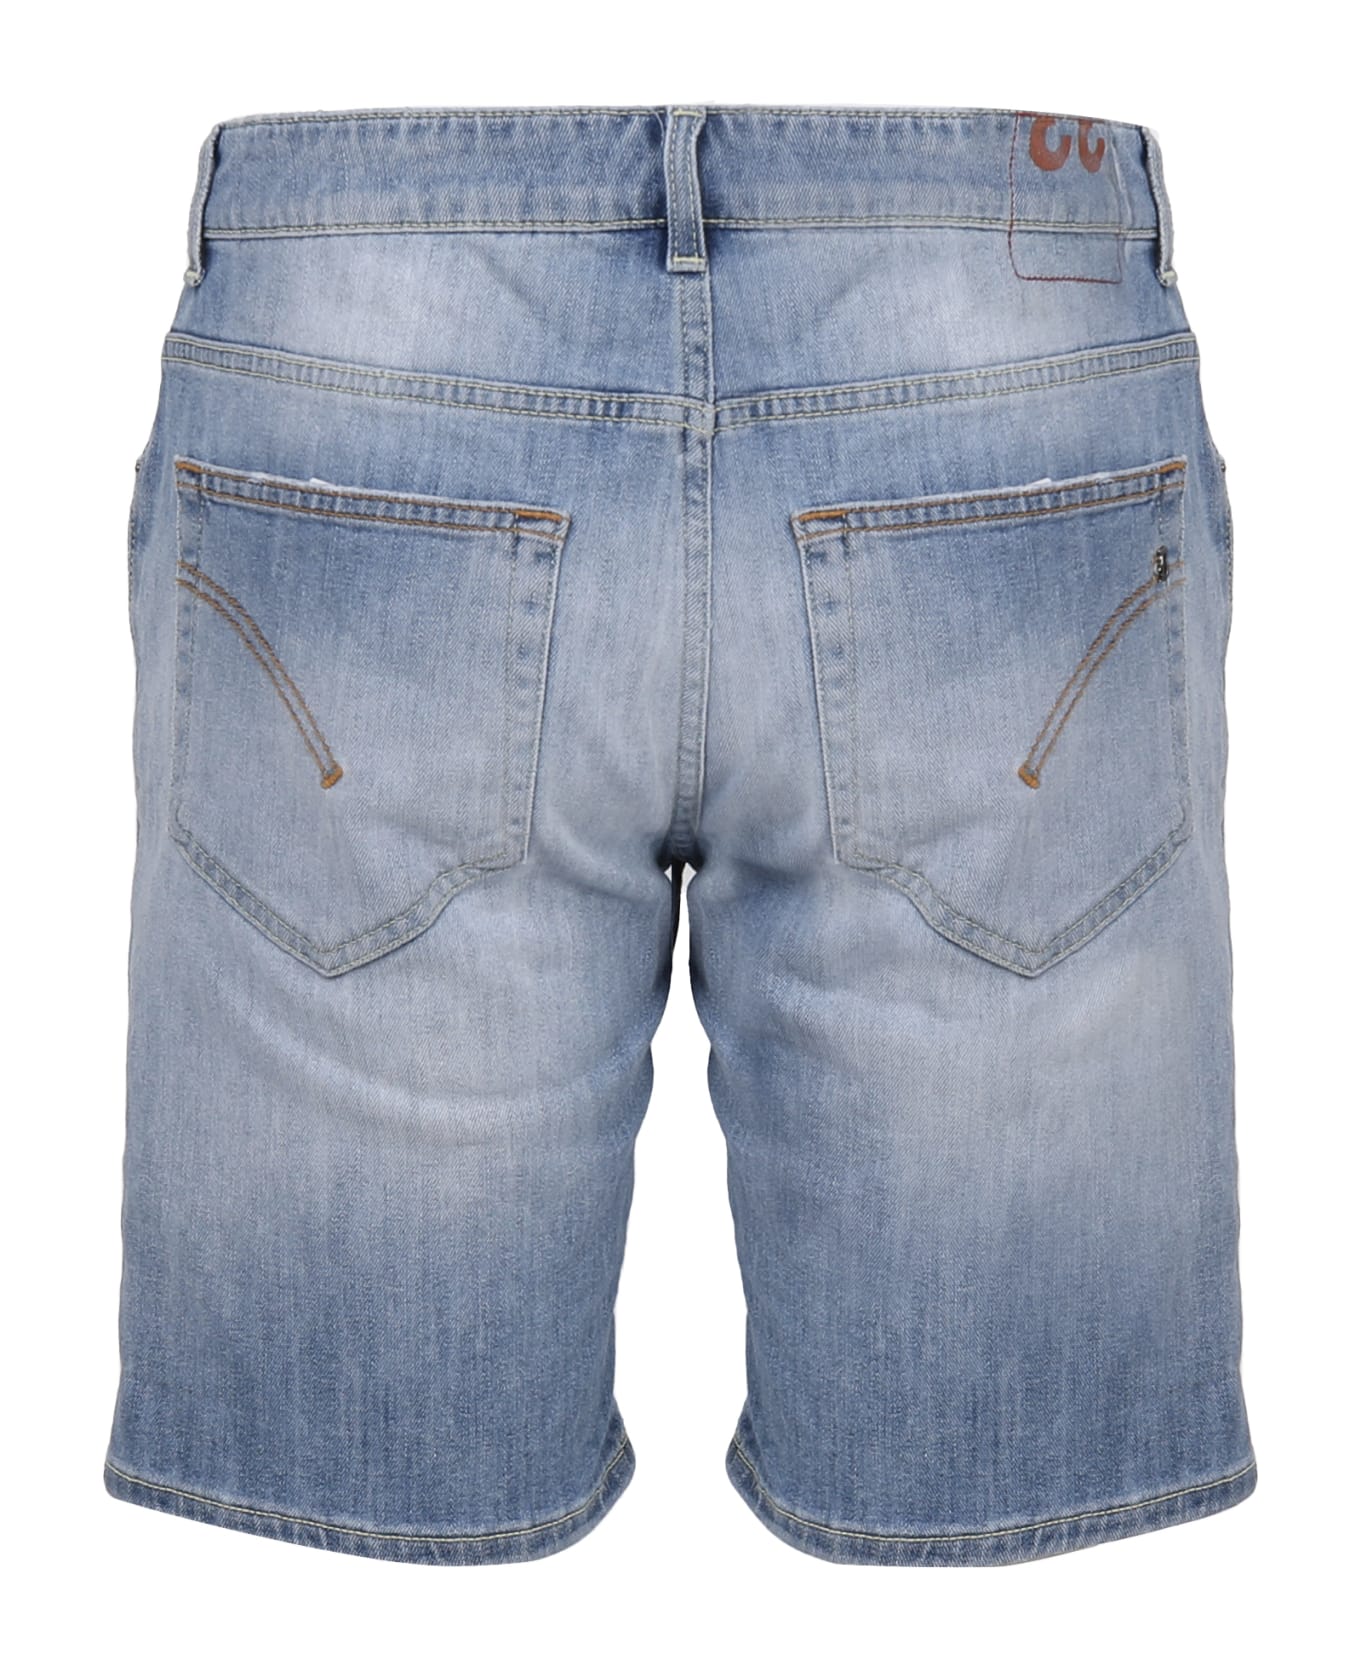 Dondup Shorts In Cotton - Light blue ショートパンツ